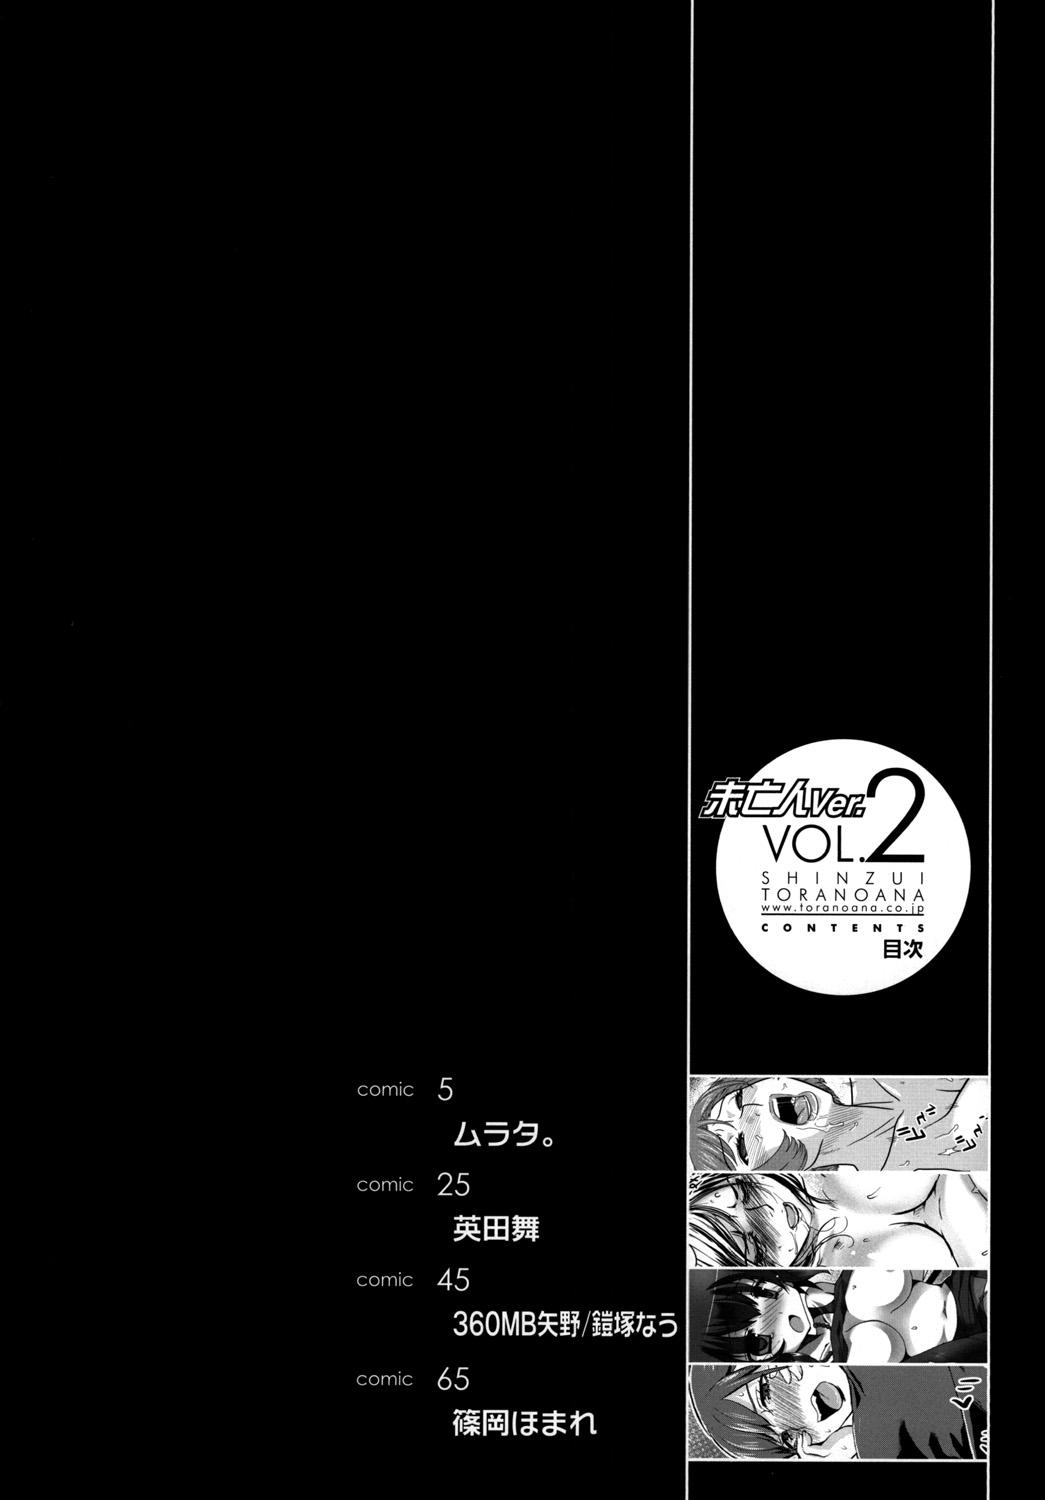 Shinzui Miboujin Ver. Vol. 2 2